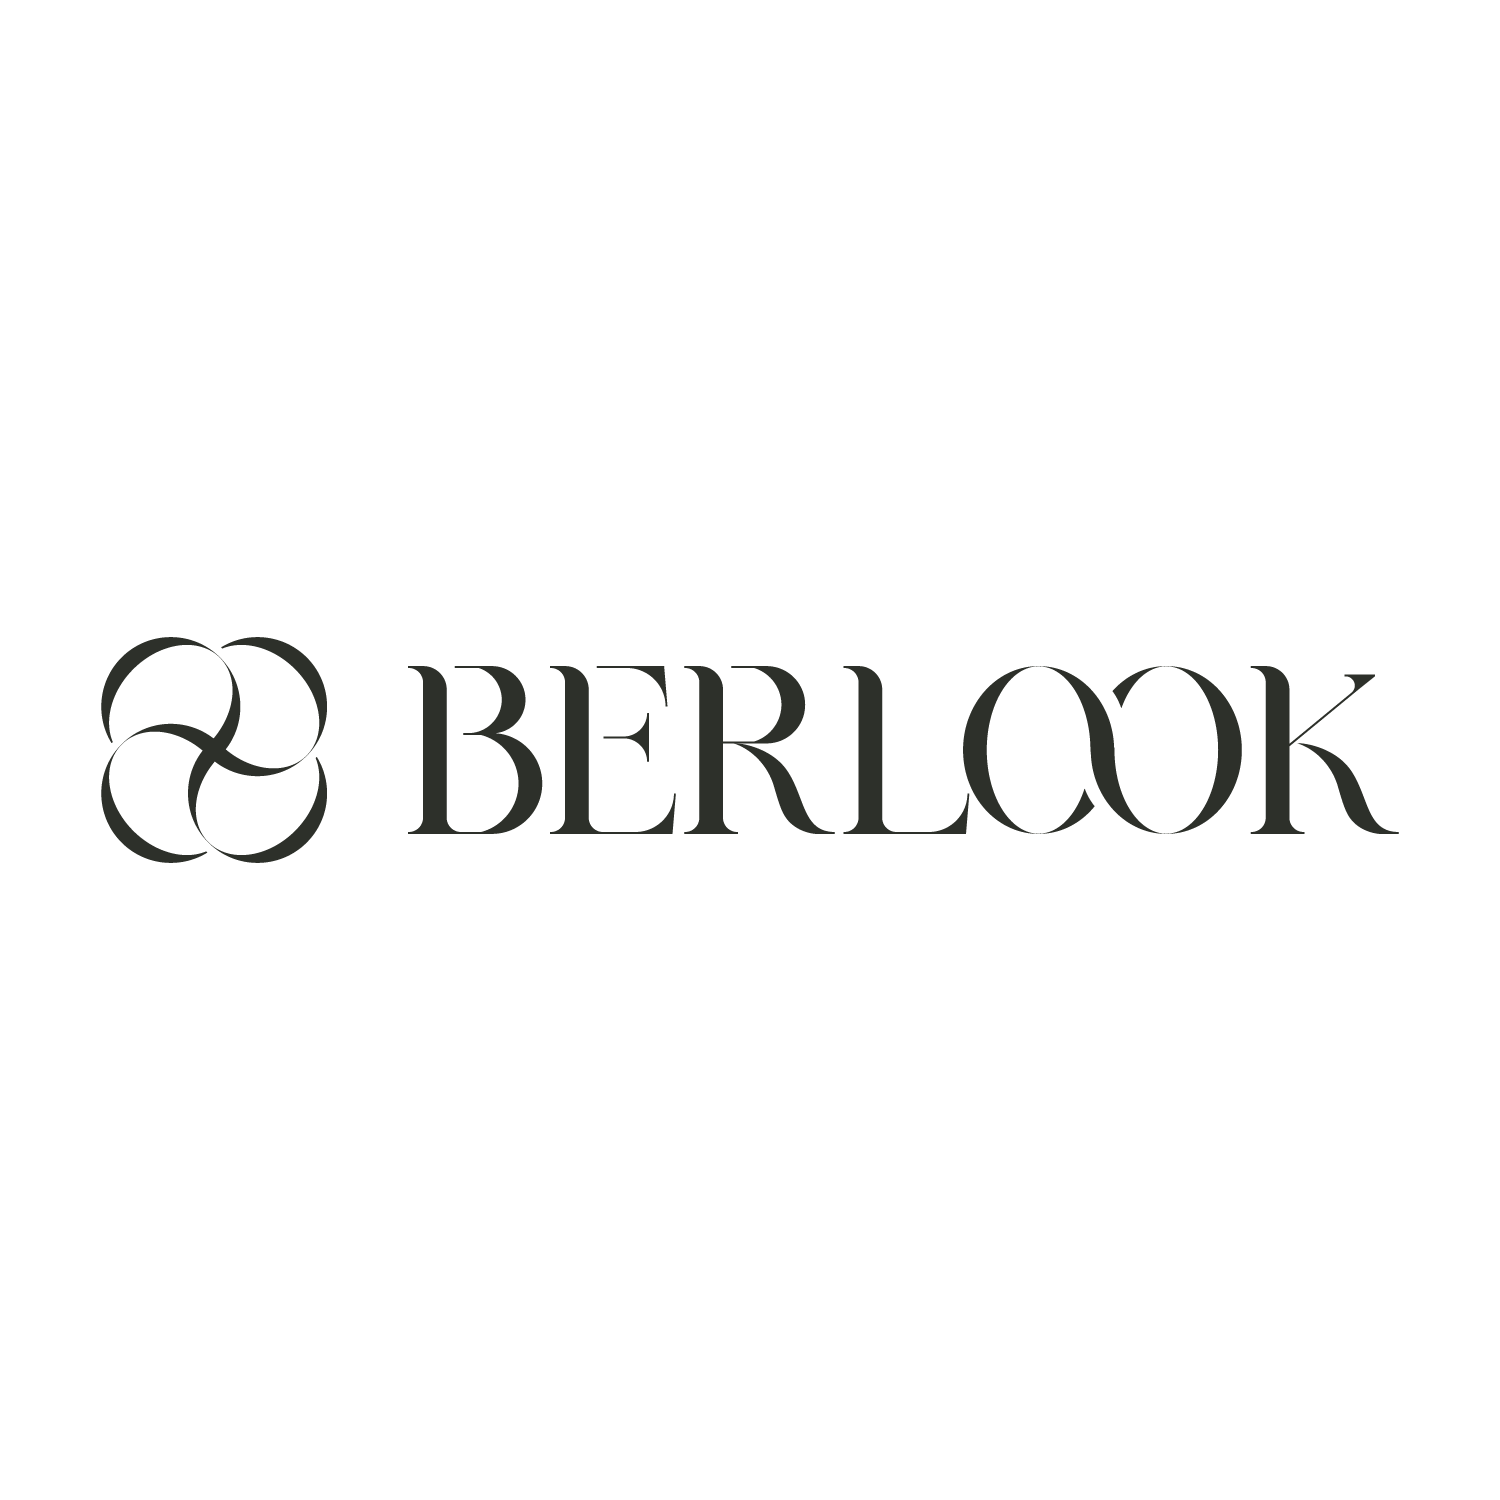 Berlook Coupons and Promo Code